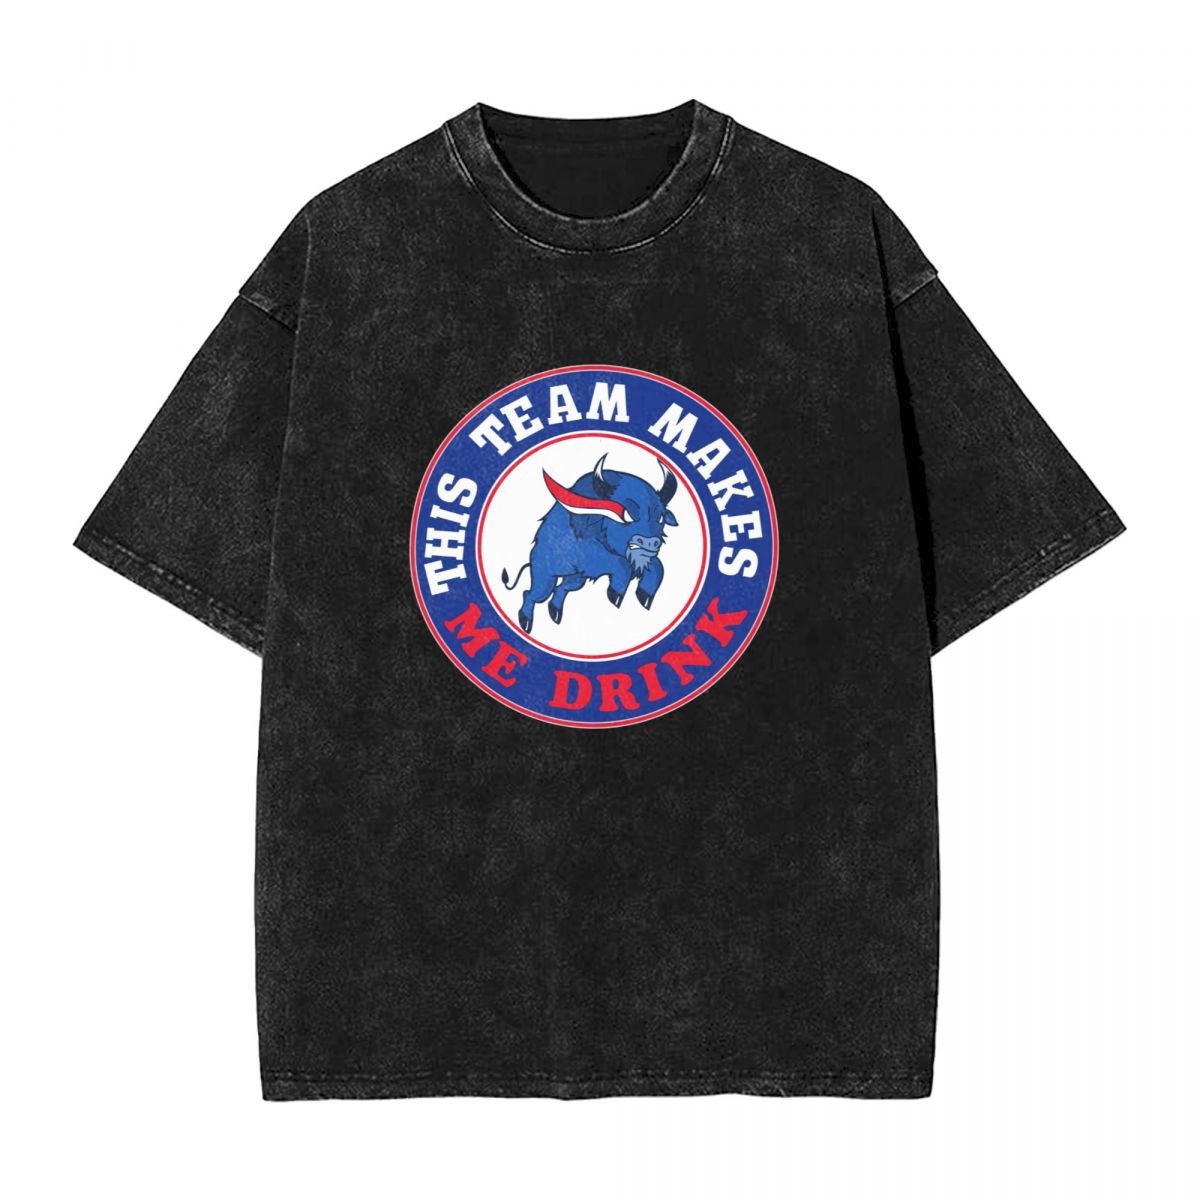 Buffalo Bills This Team Makes Me Drink Vintage Oversized T-Shirt Men's